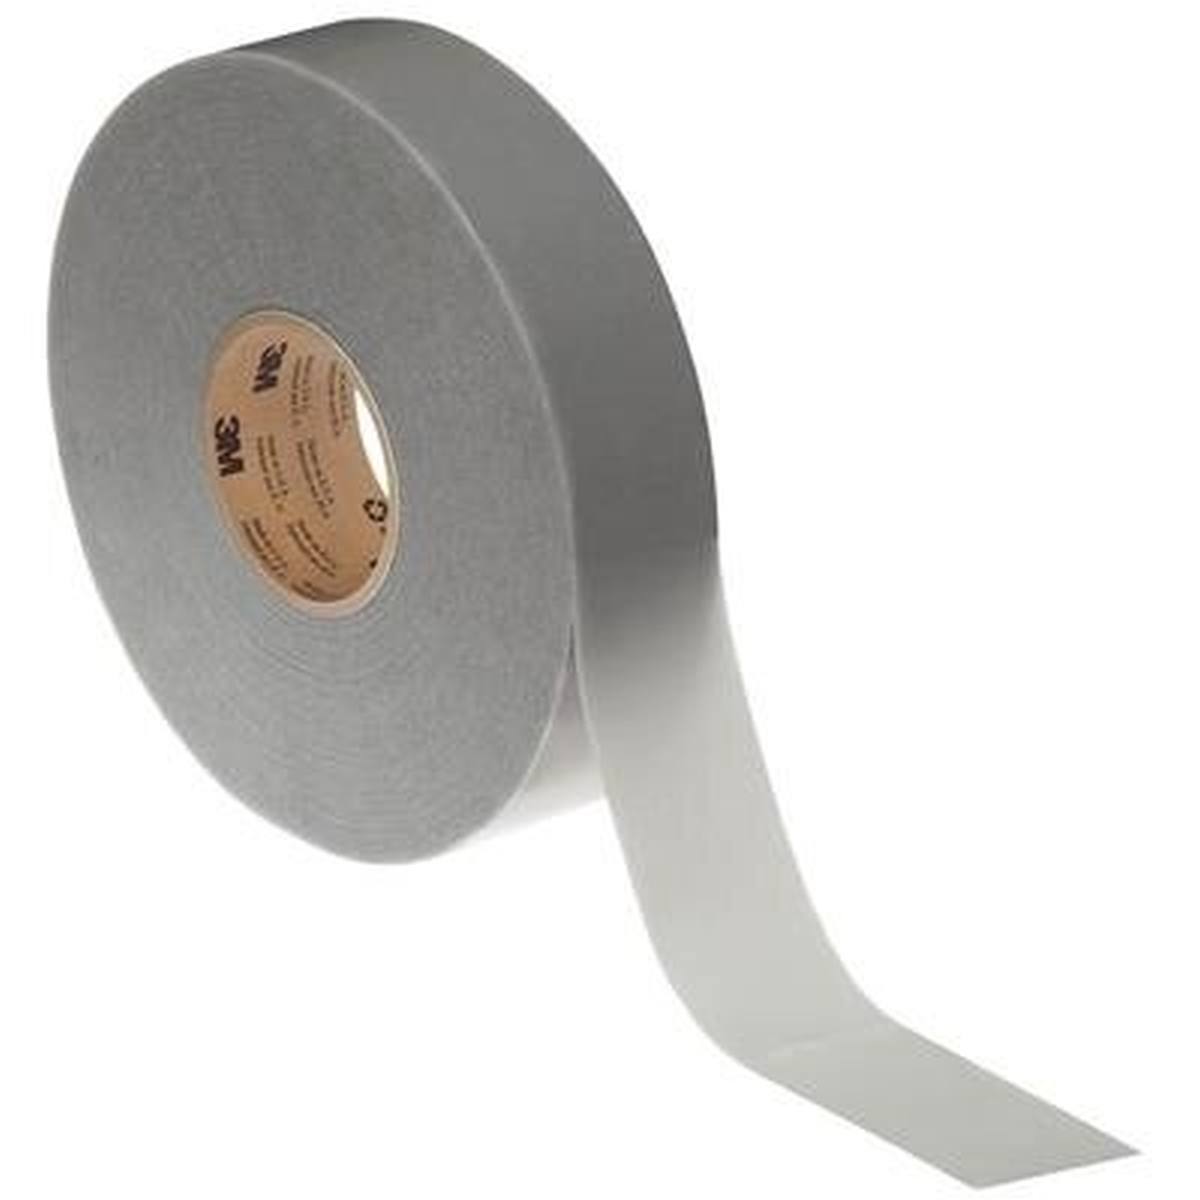 3M high-performance sealing tape 4412G, 25 mm x 16.5 m, 2 mm, gray